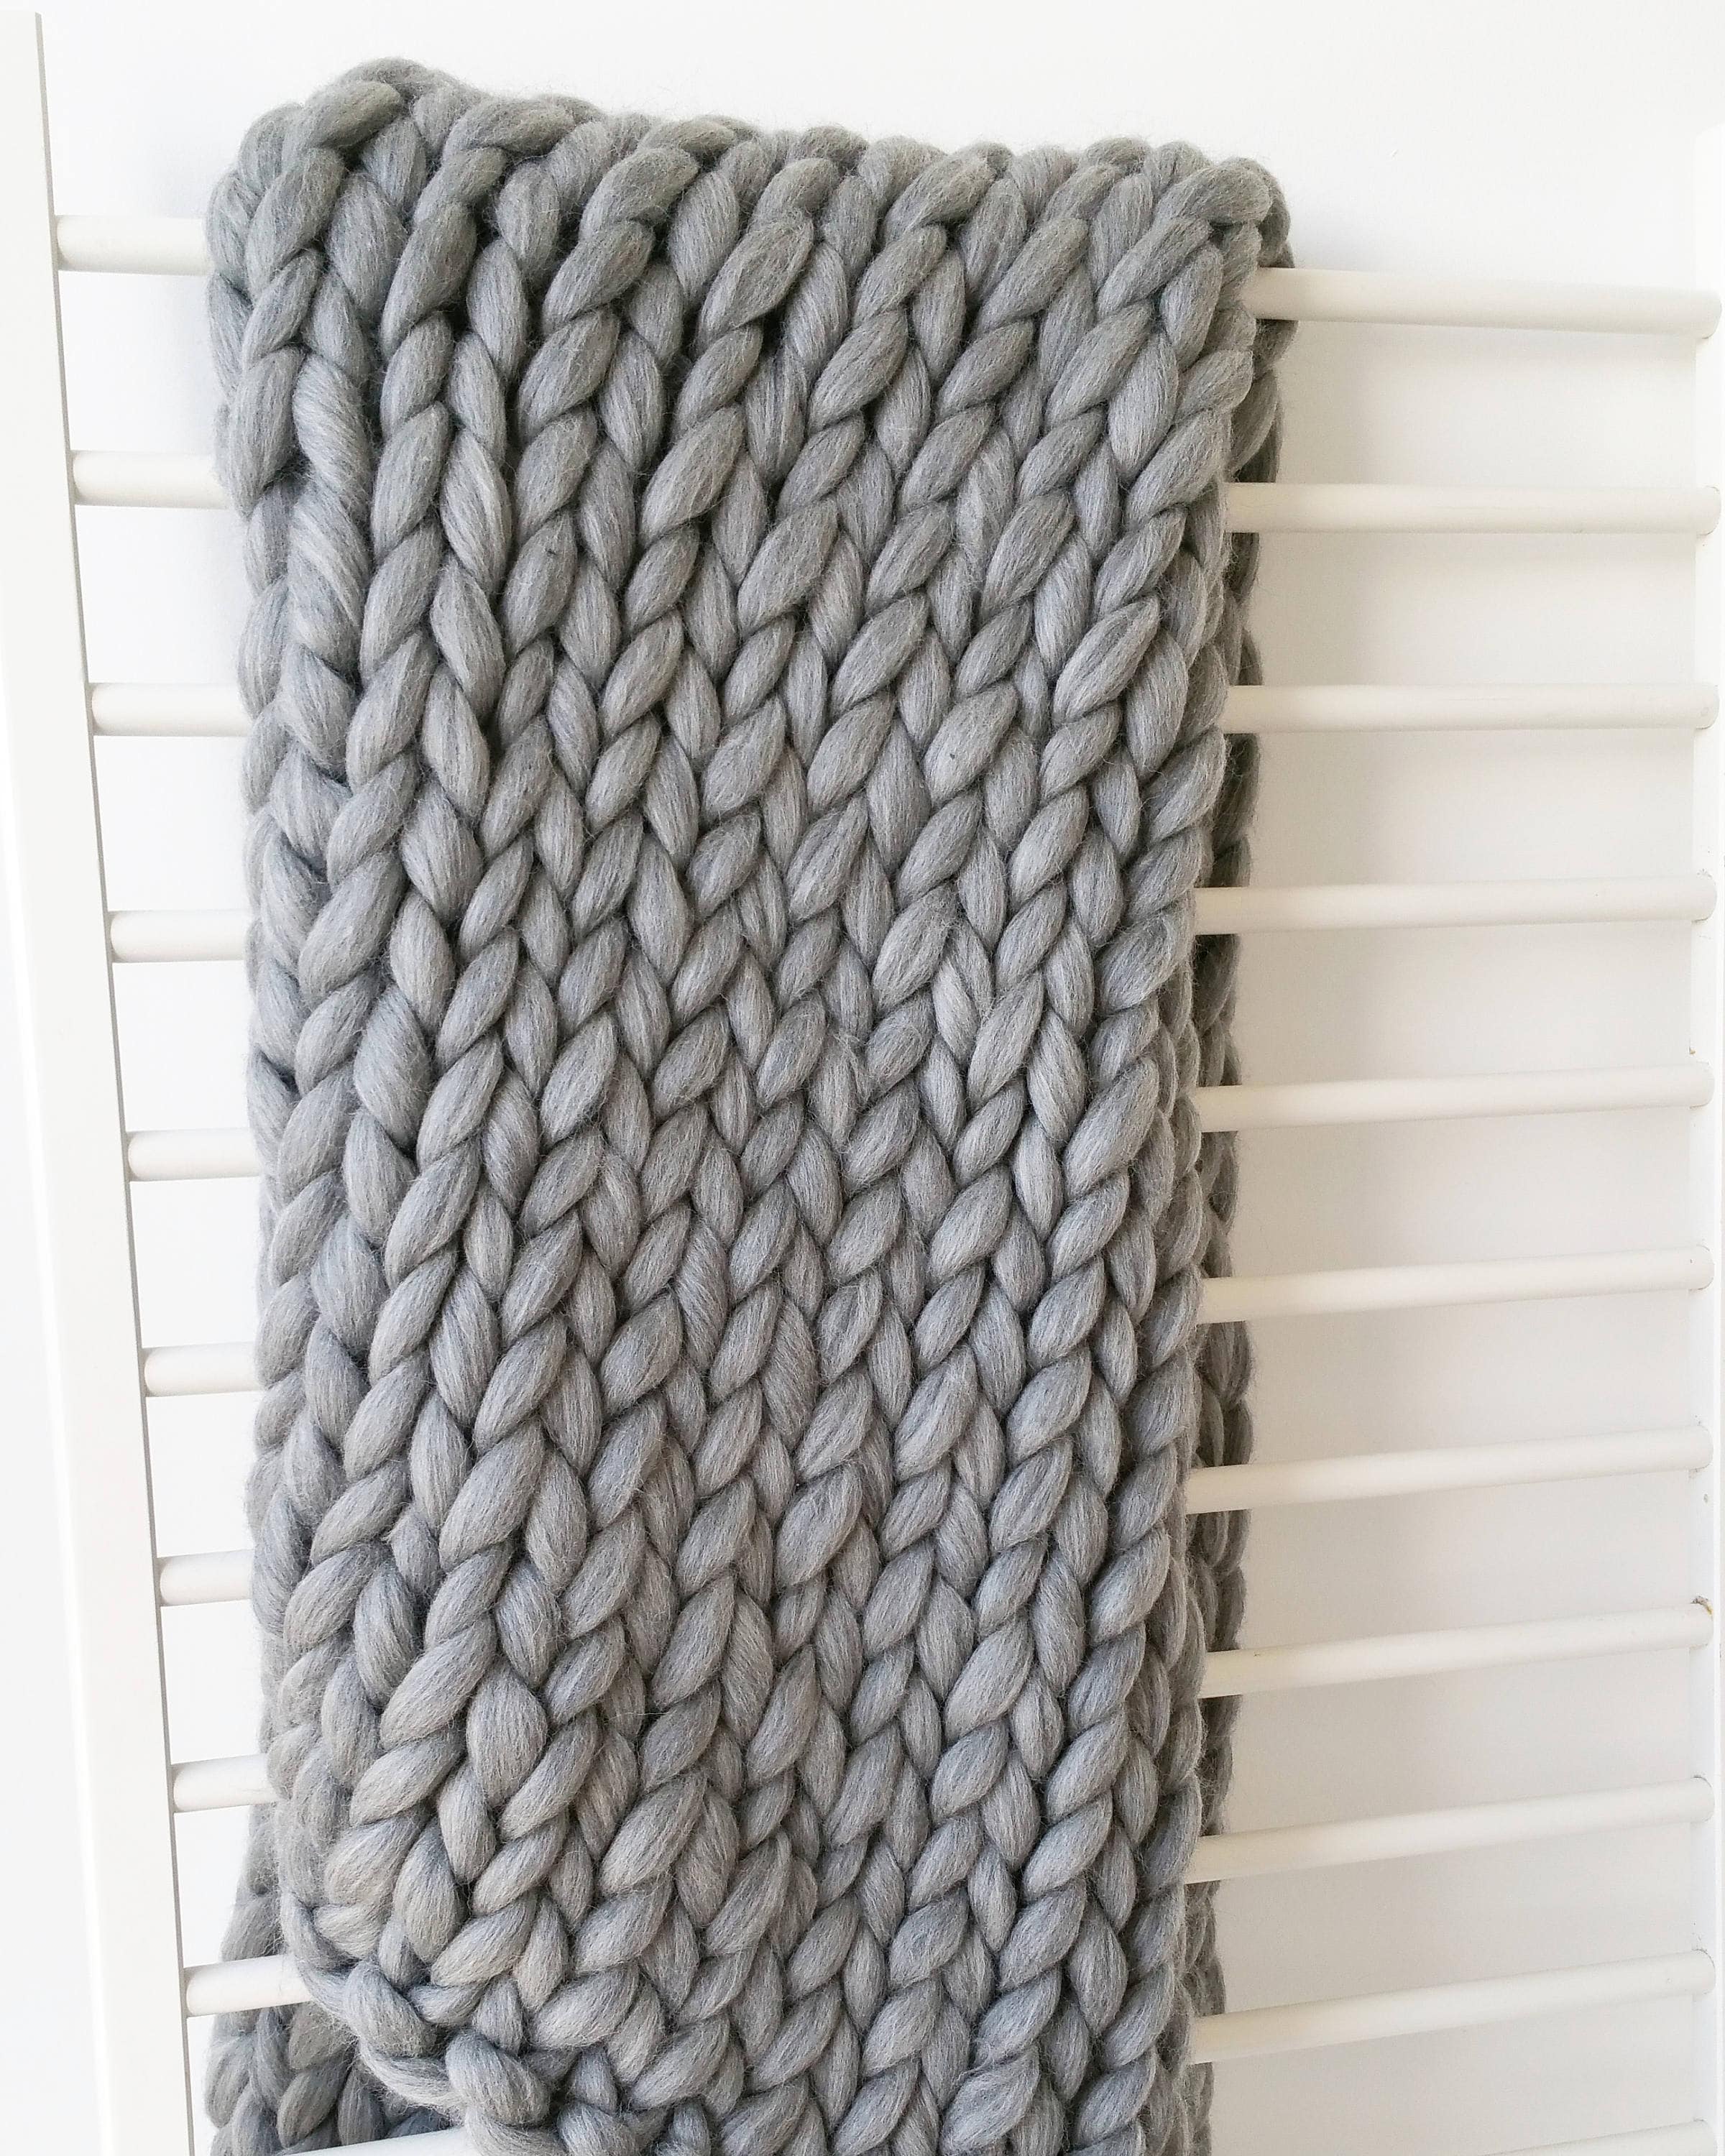 Chunky Knit Blanket Throw Merino Wool Blanket Home Decor